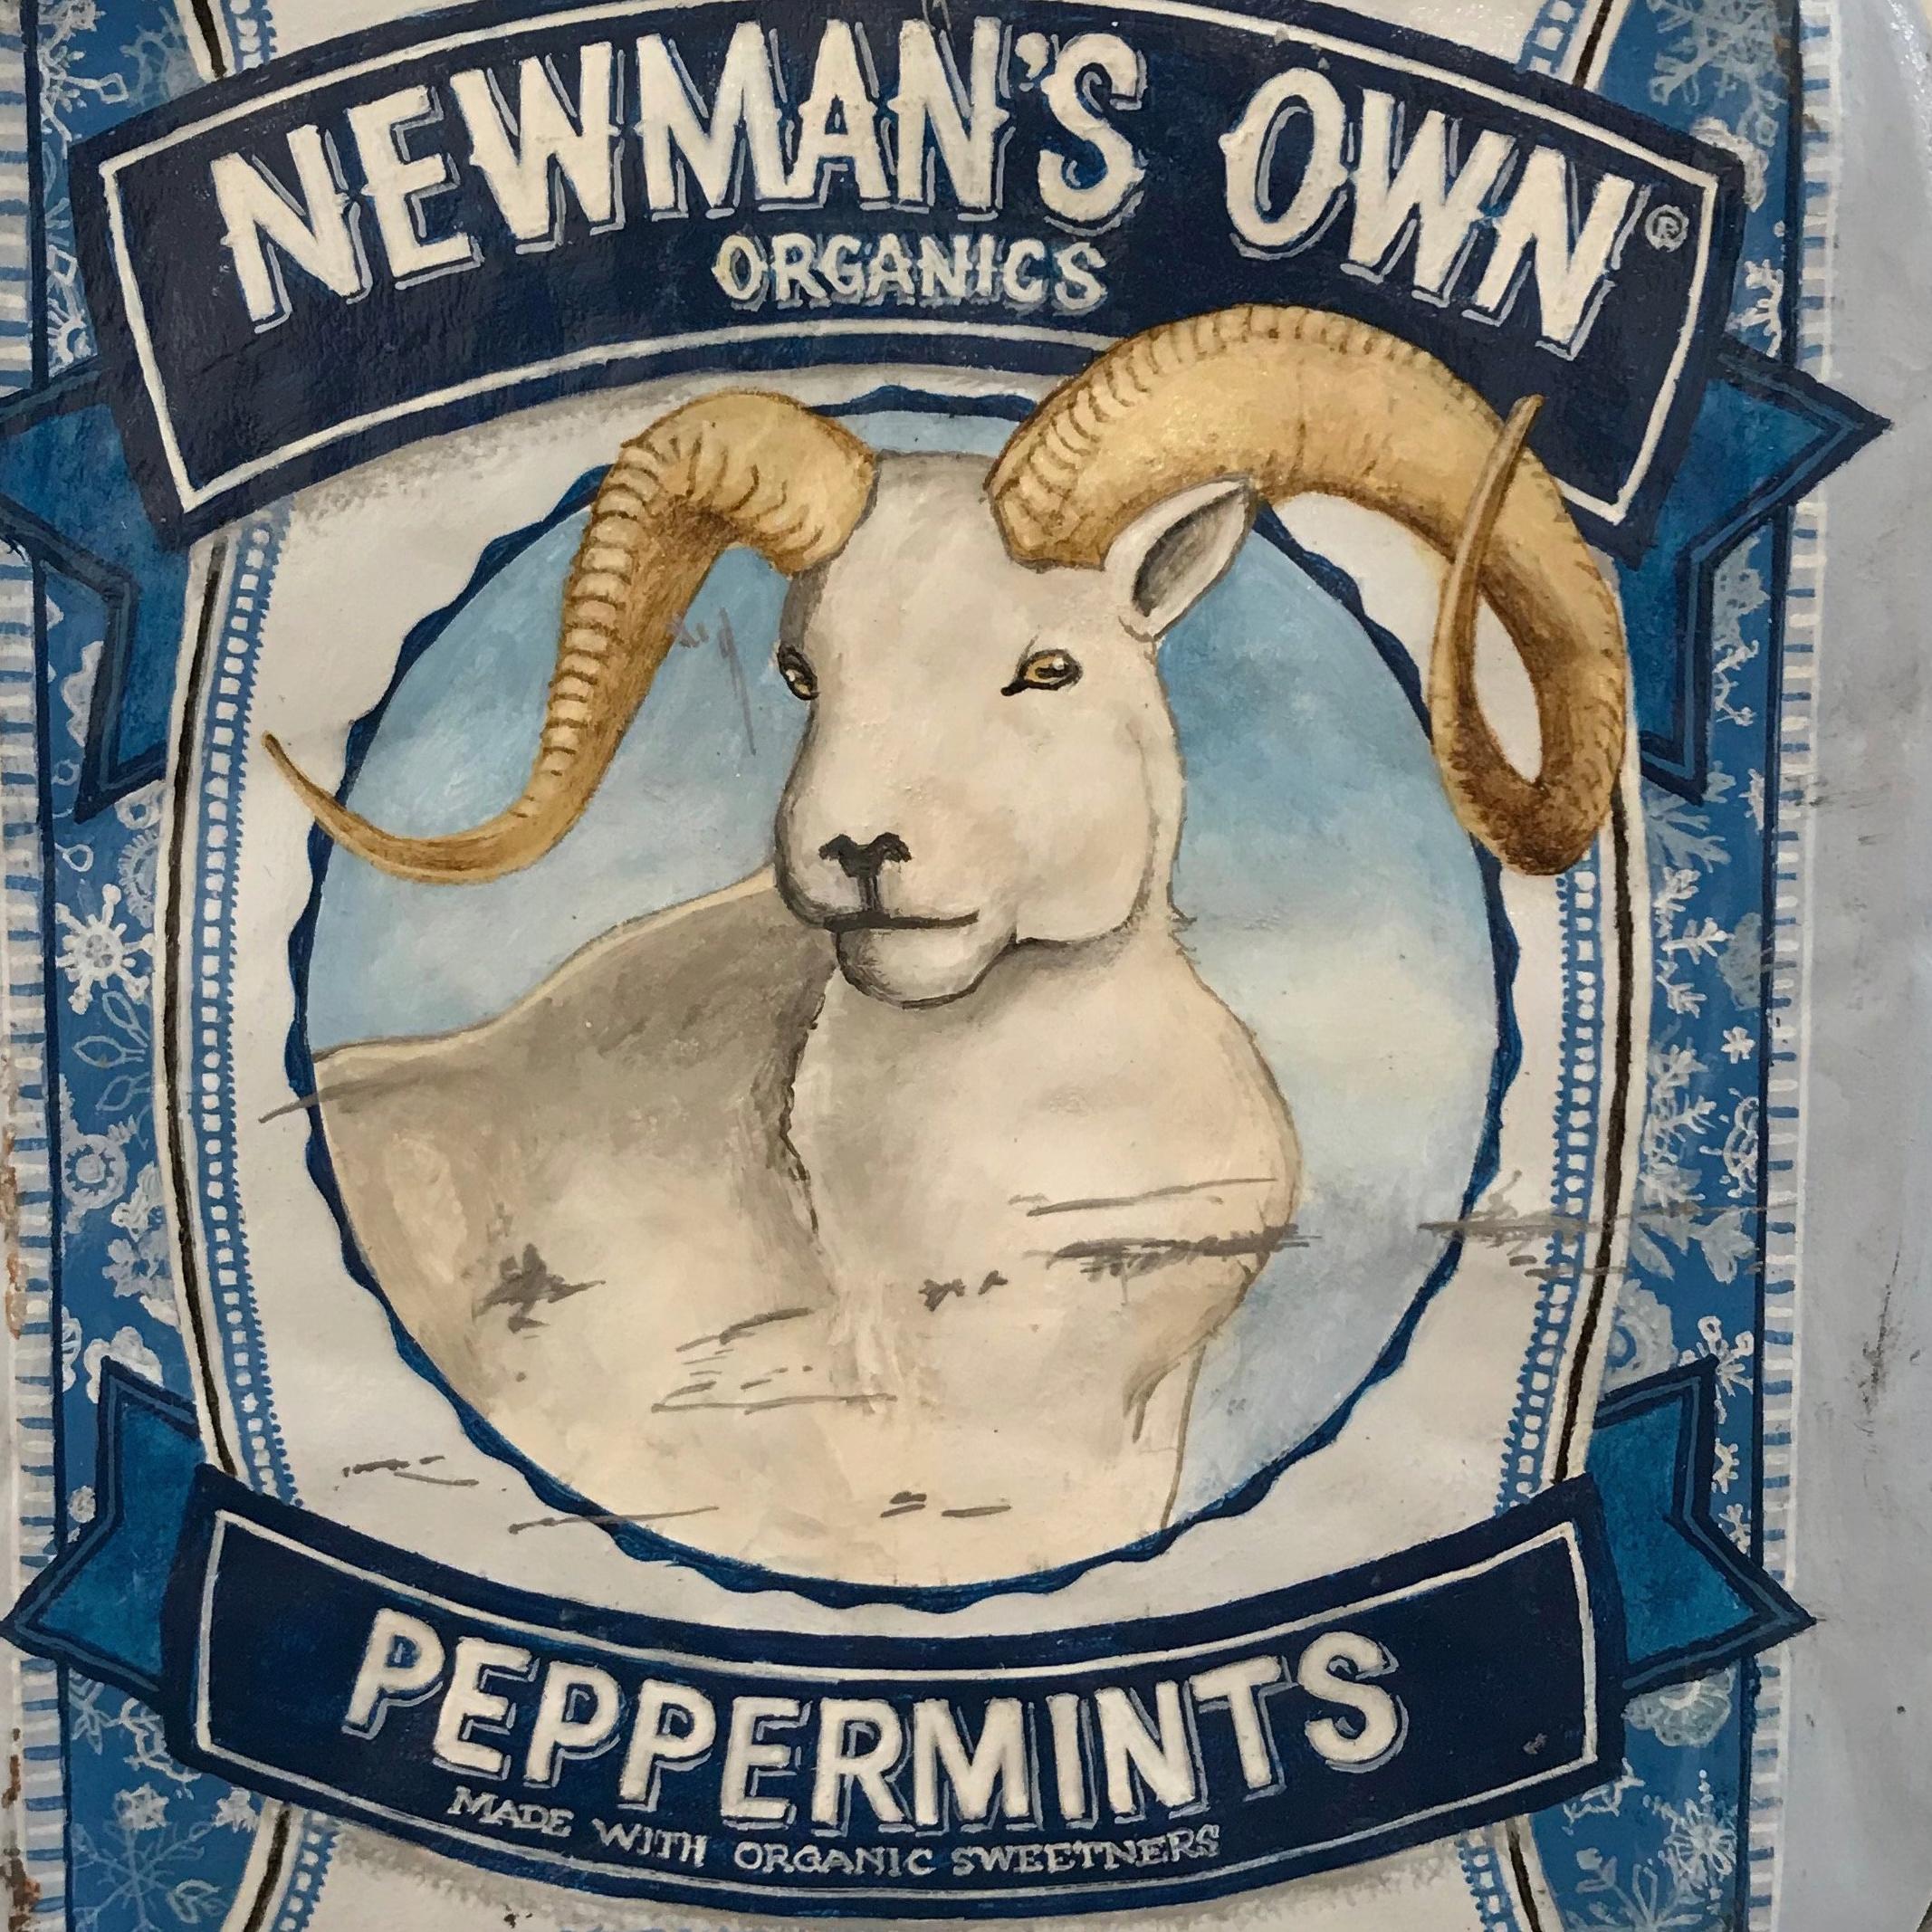 Newman's Own Peppermints - American Realist Sculpture by Tom Pfannerstill